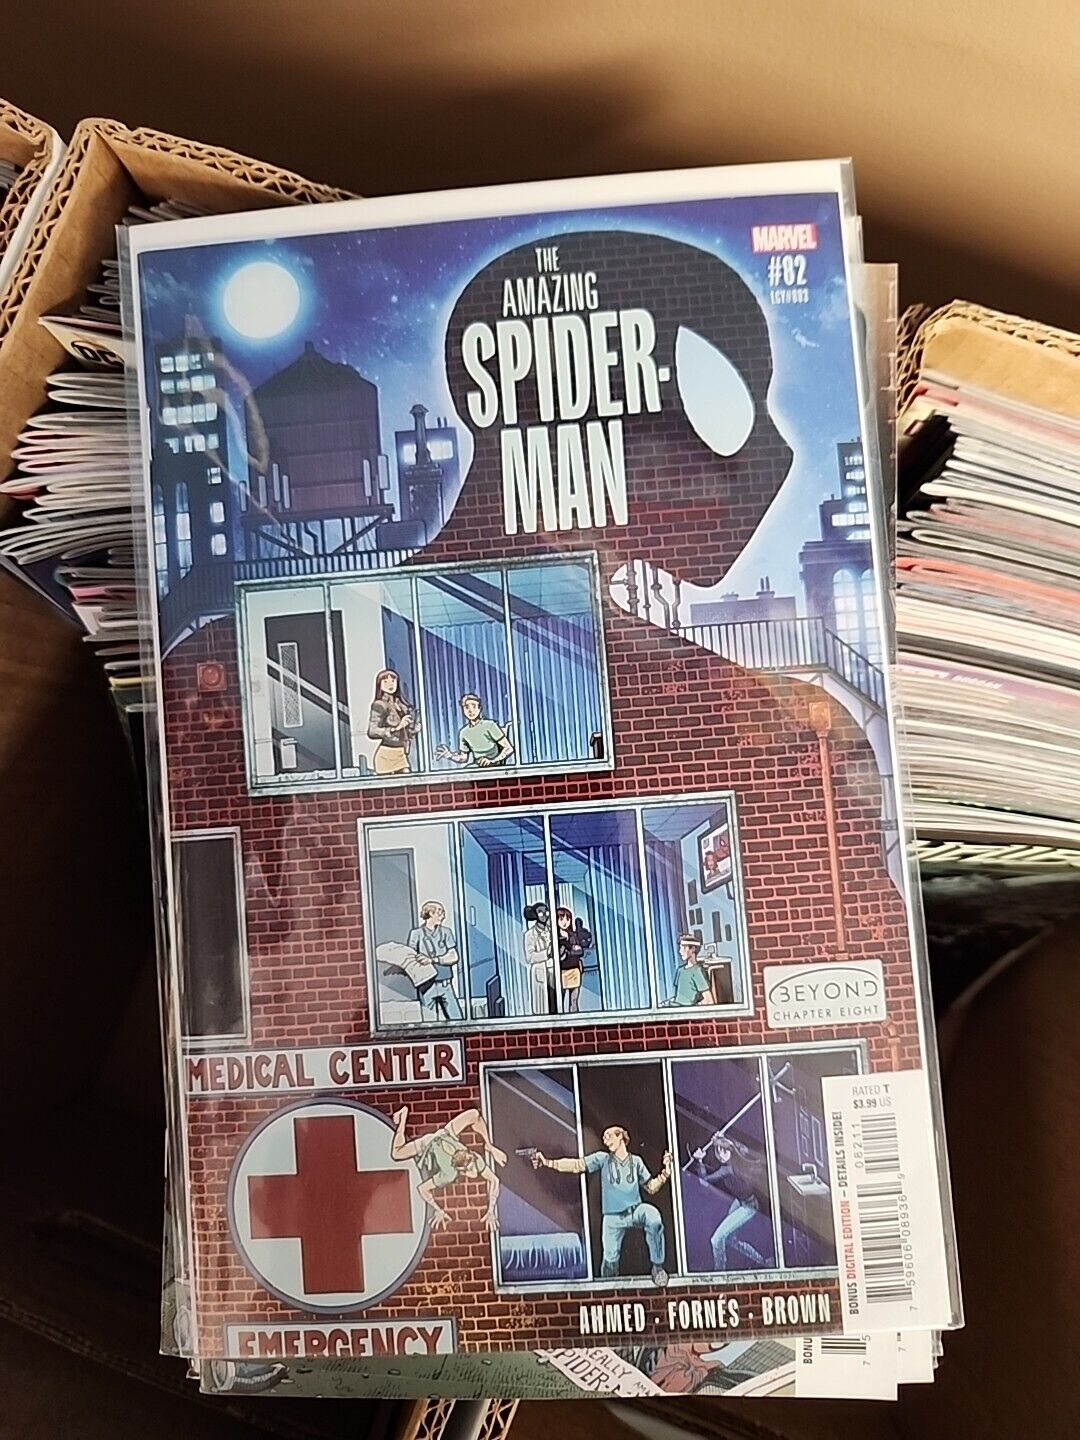 The Amazing Spiderman #82-#84 Legacy #883-#885